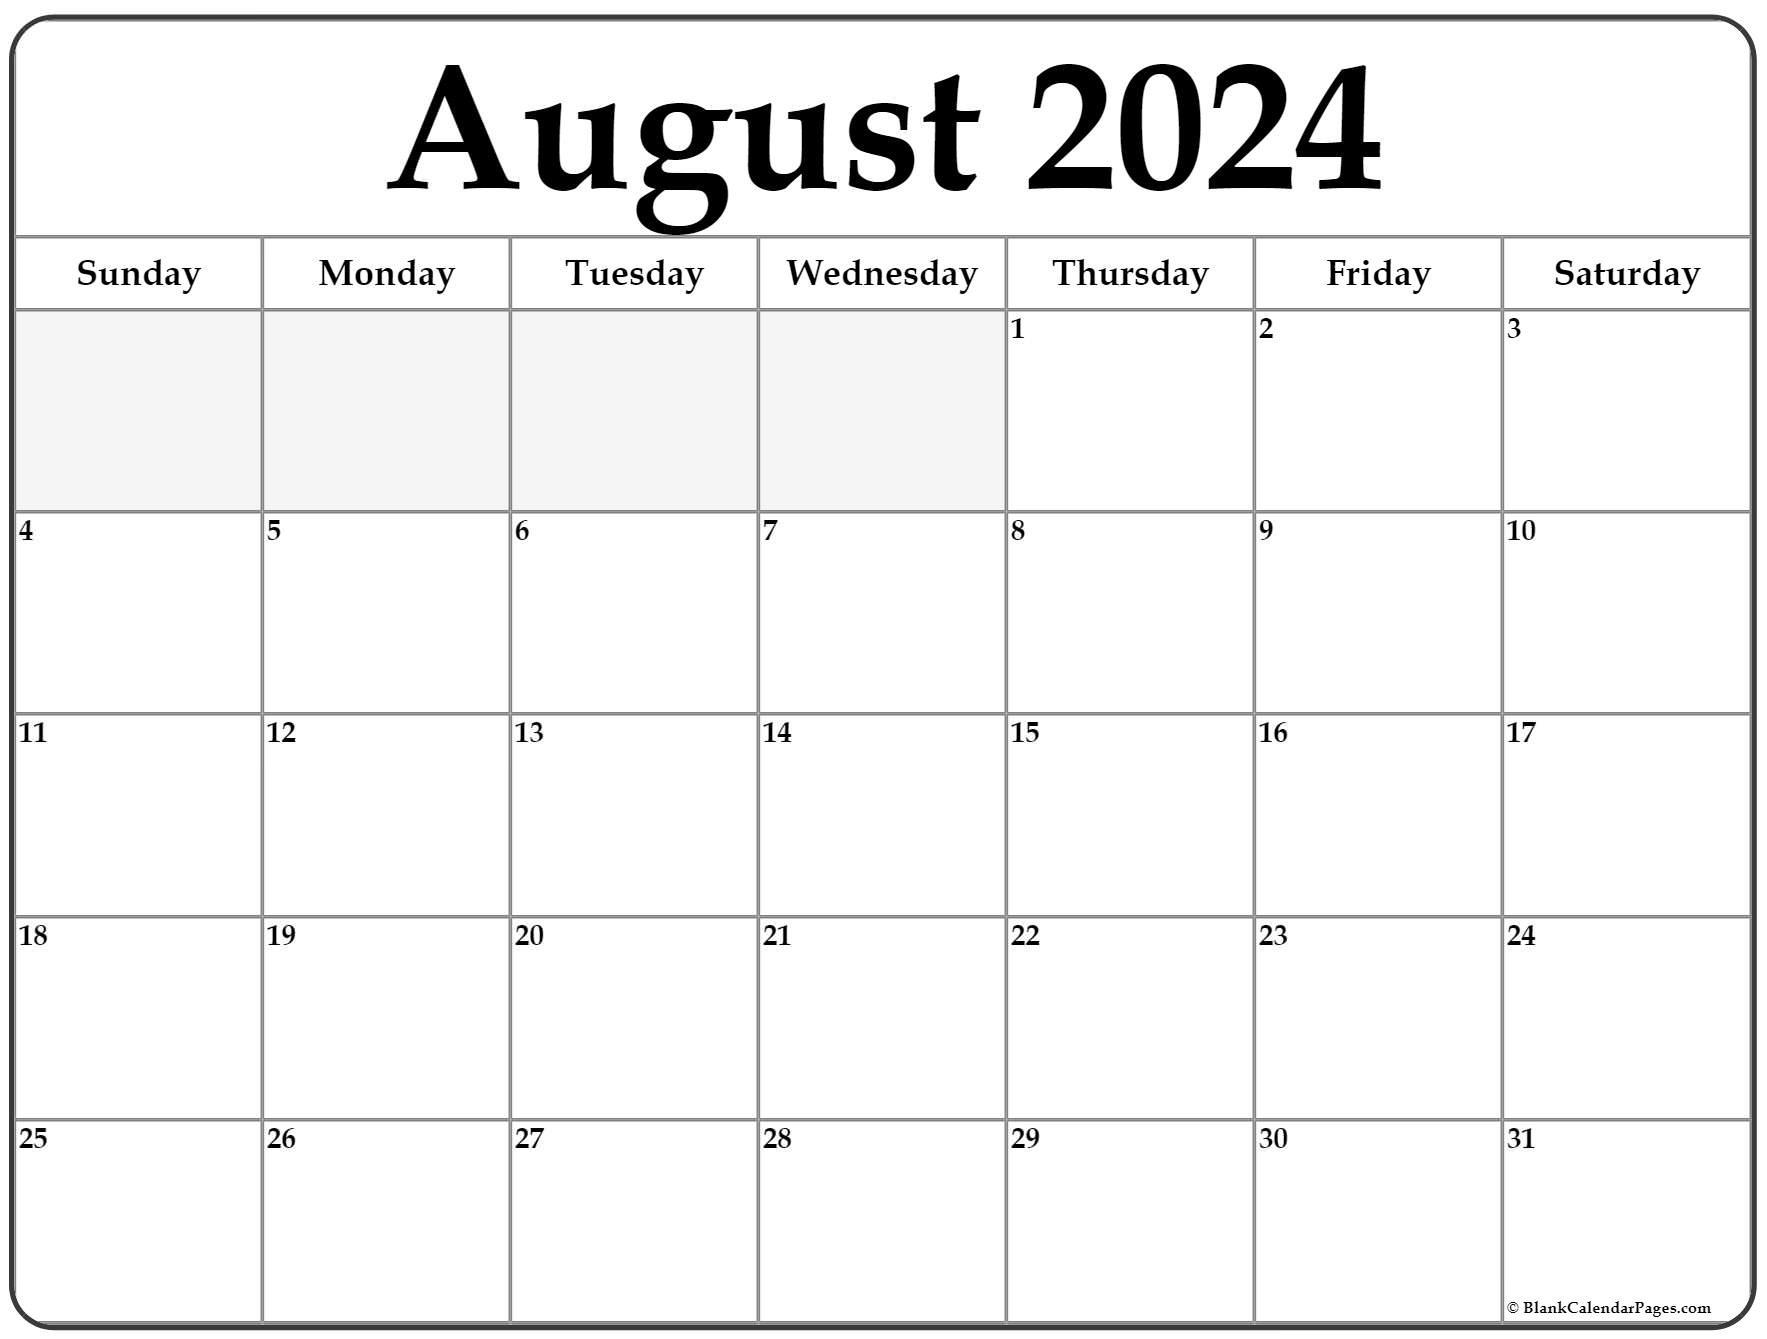 August 2024 Calendar | Free Printable Calendar for Free Printable Calendar 2024 July August